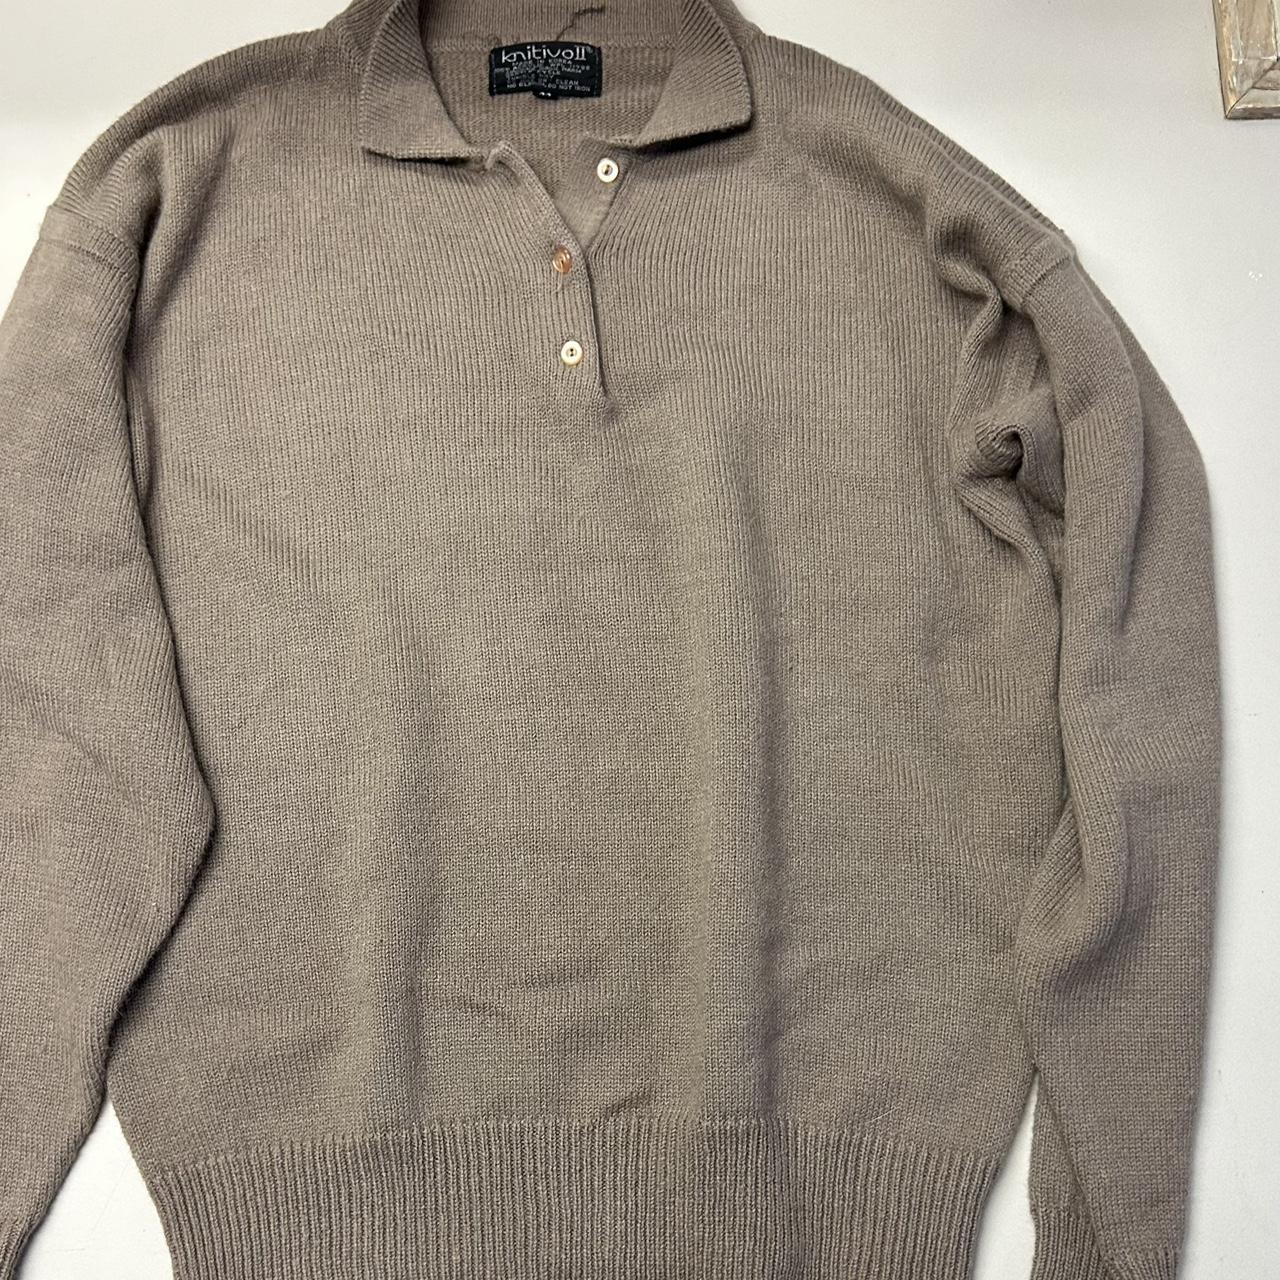 brown collared sweater - Depop